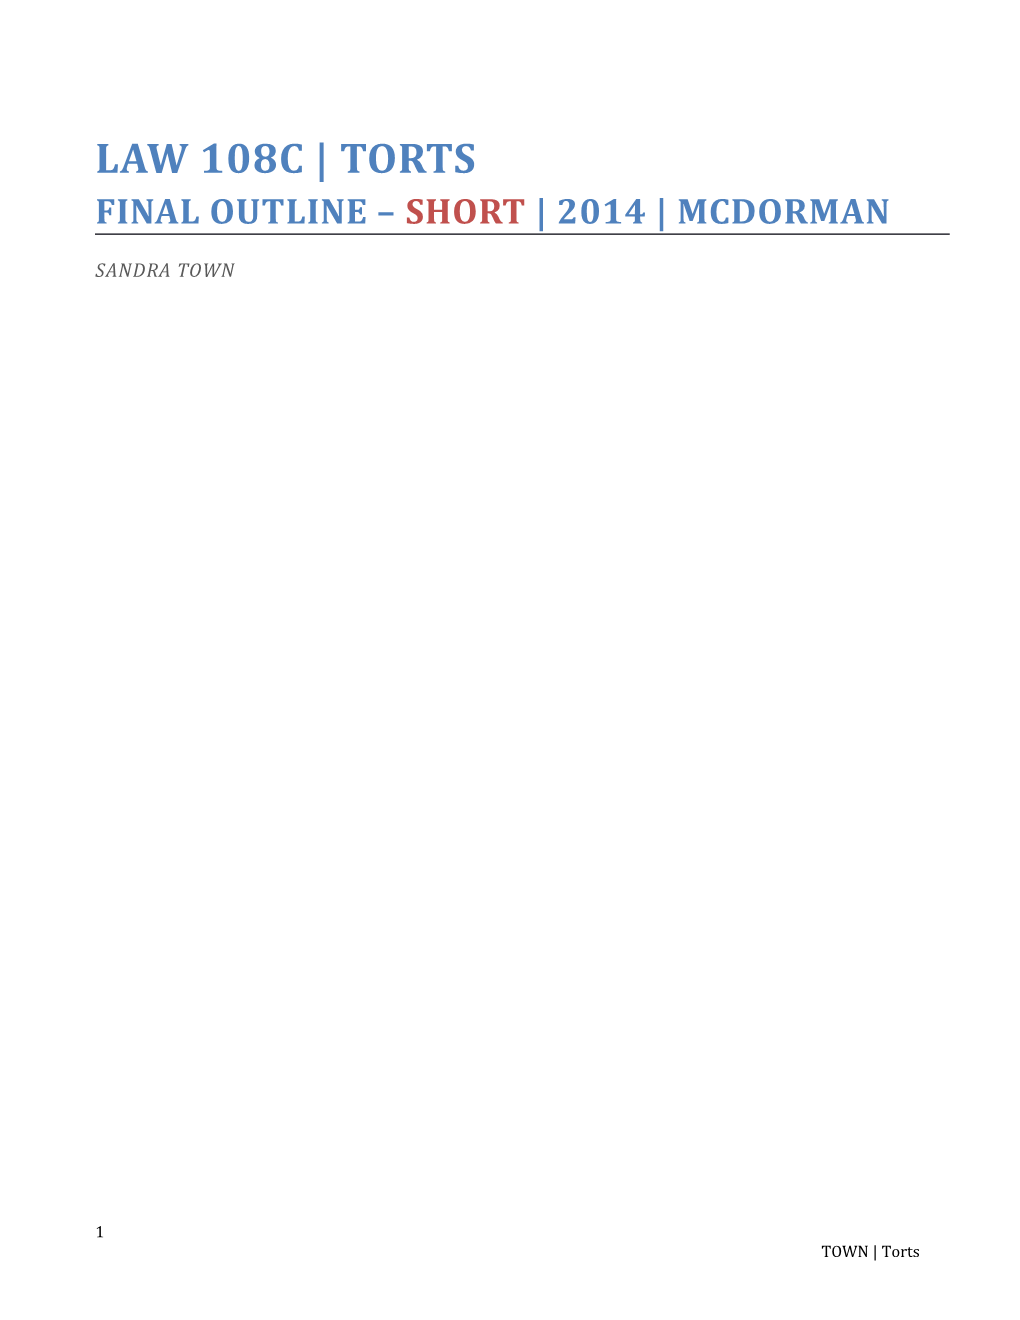 Law 108C Torts Final Outline Short 2014 Mcdorman